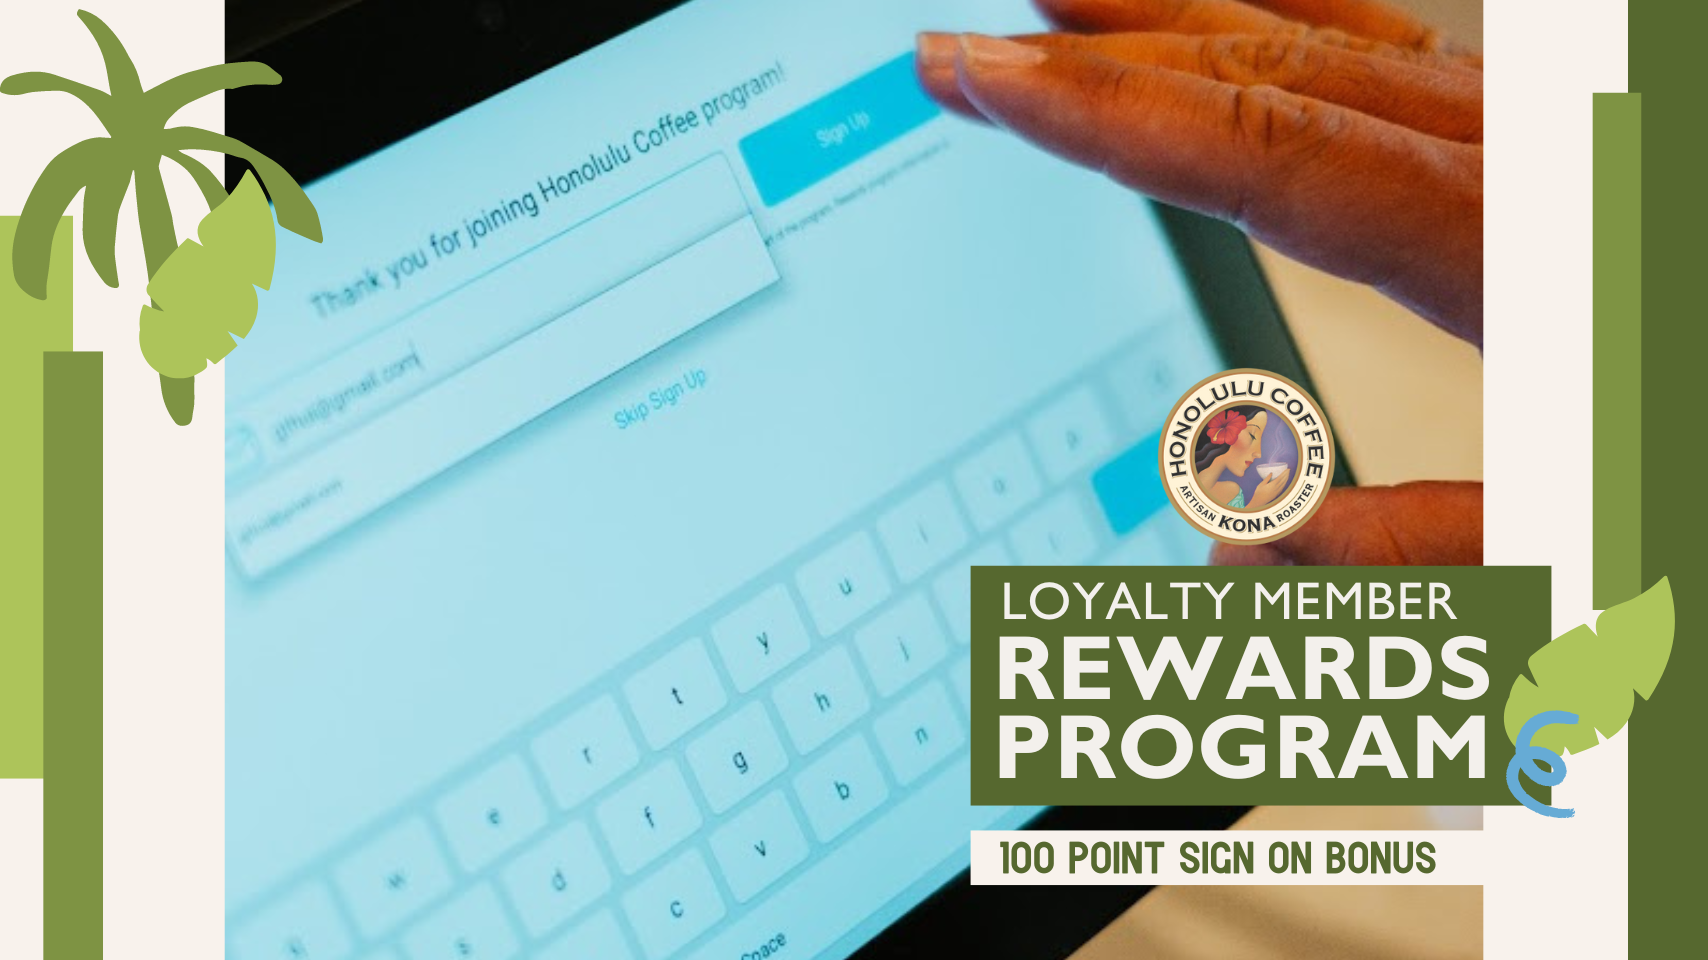 Loyalty Member Rewards Program - 100 point sign on bonus